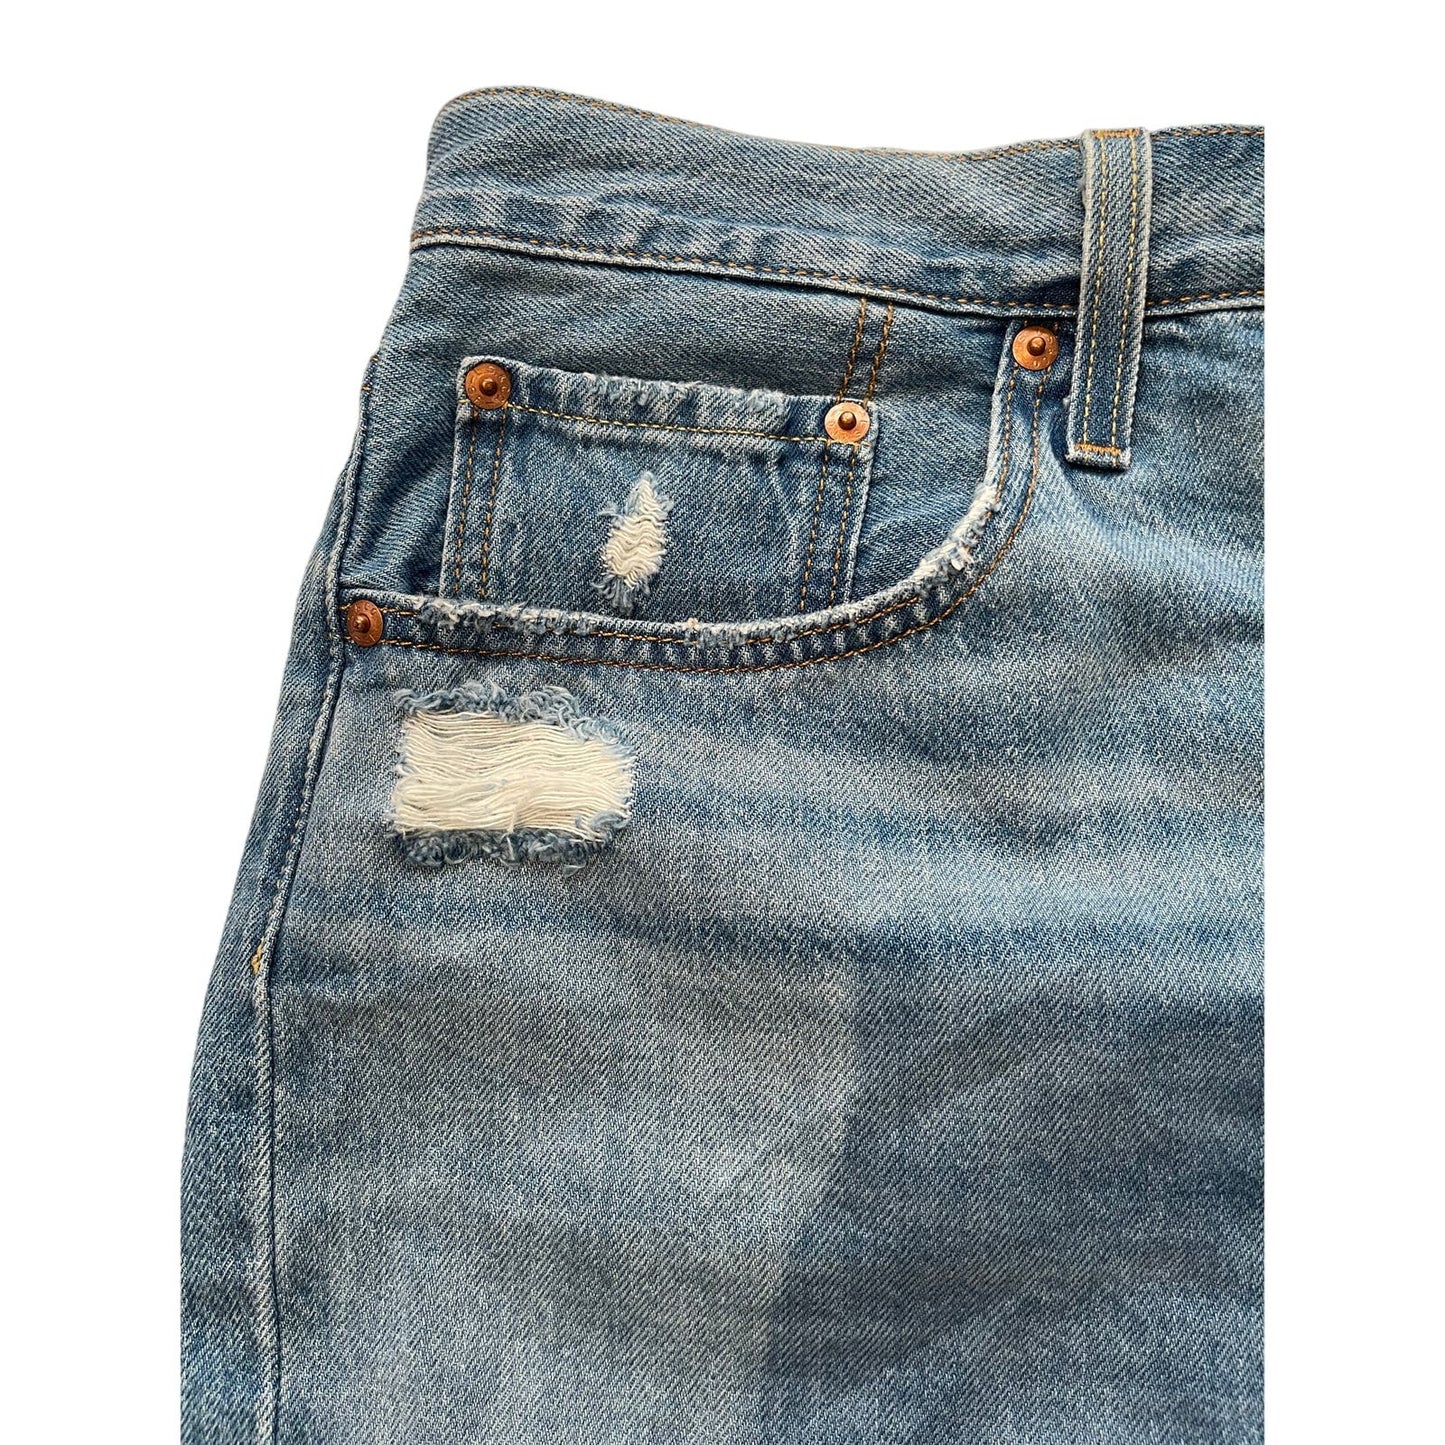 NWT Levi's 501 Women's Denim Cutoff Shorts Size 33 - 6 Button w/Pockets